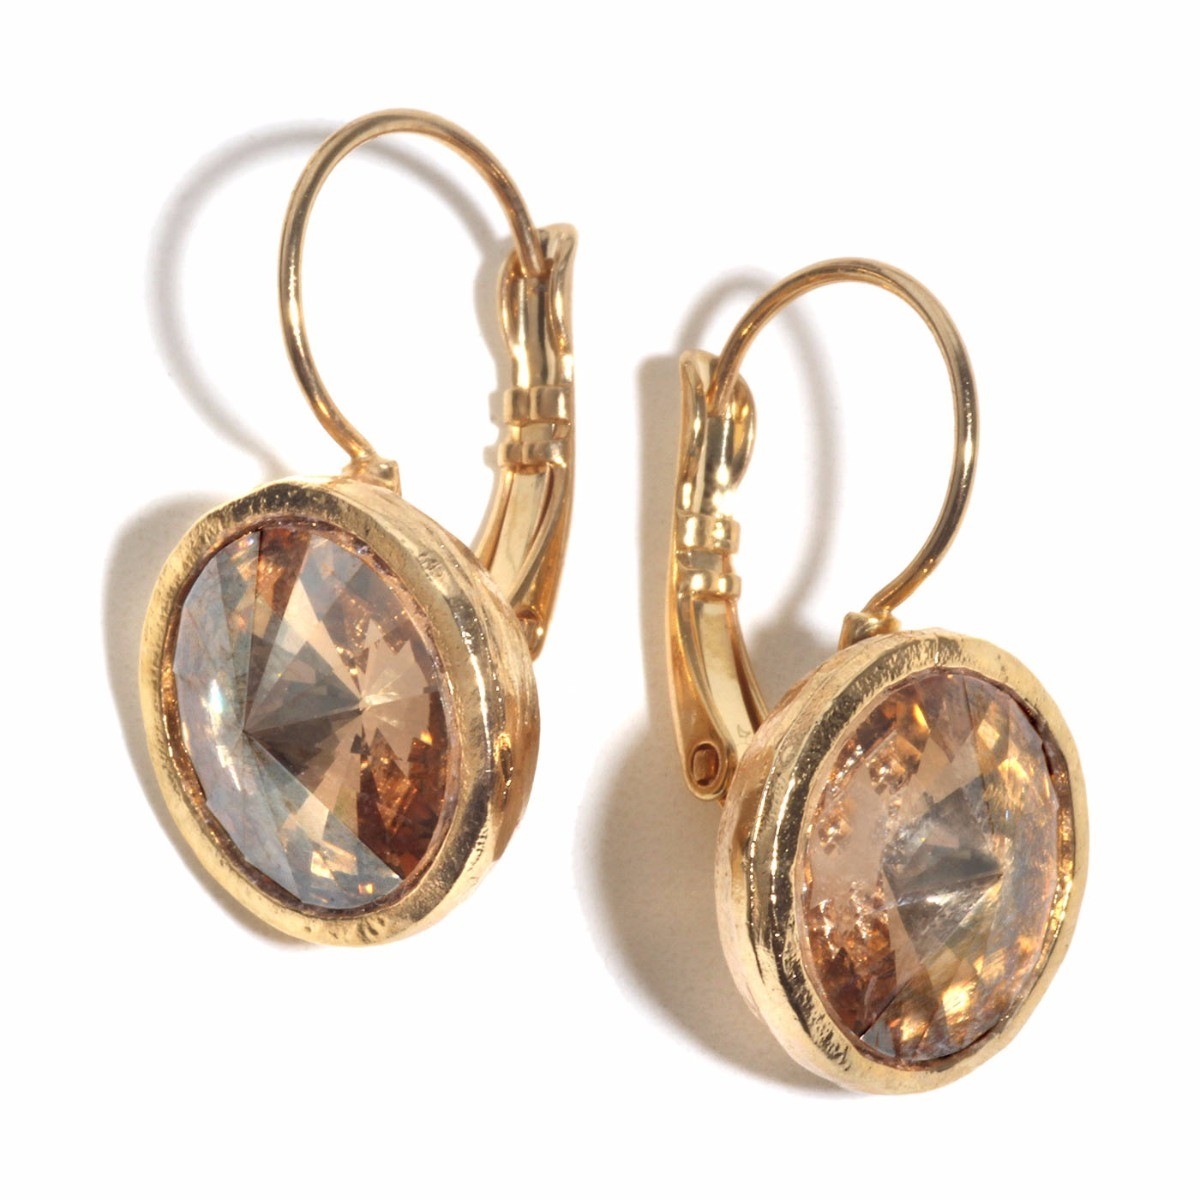 SEA Smadar Eliasaf Gold-Plated Drop Earrings with Champagne Swarovski Stone  - 1